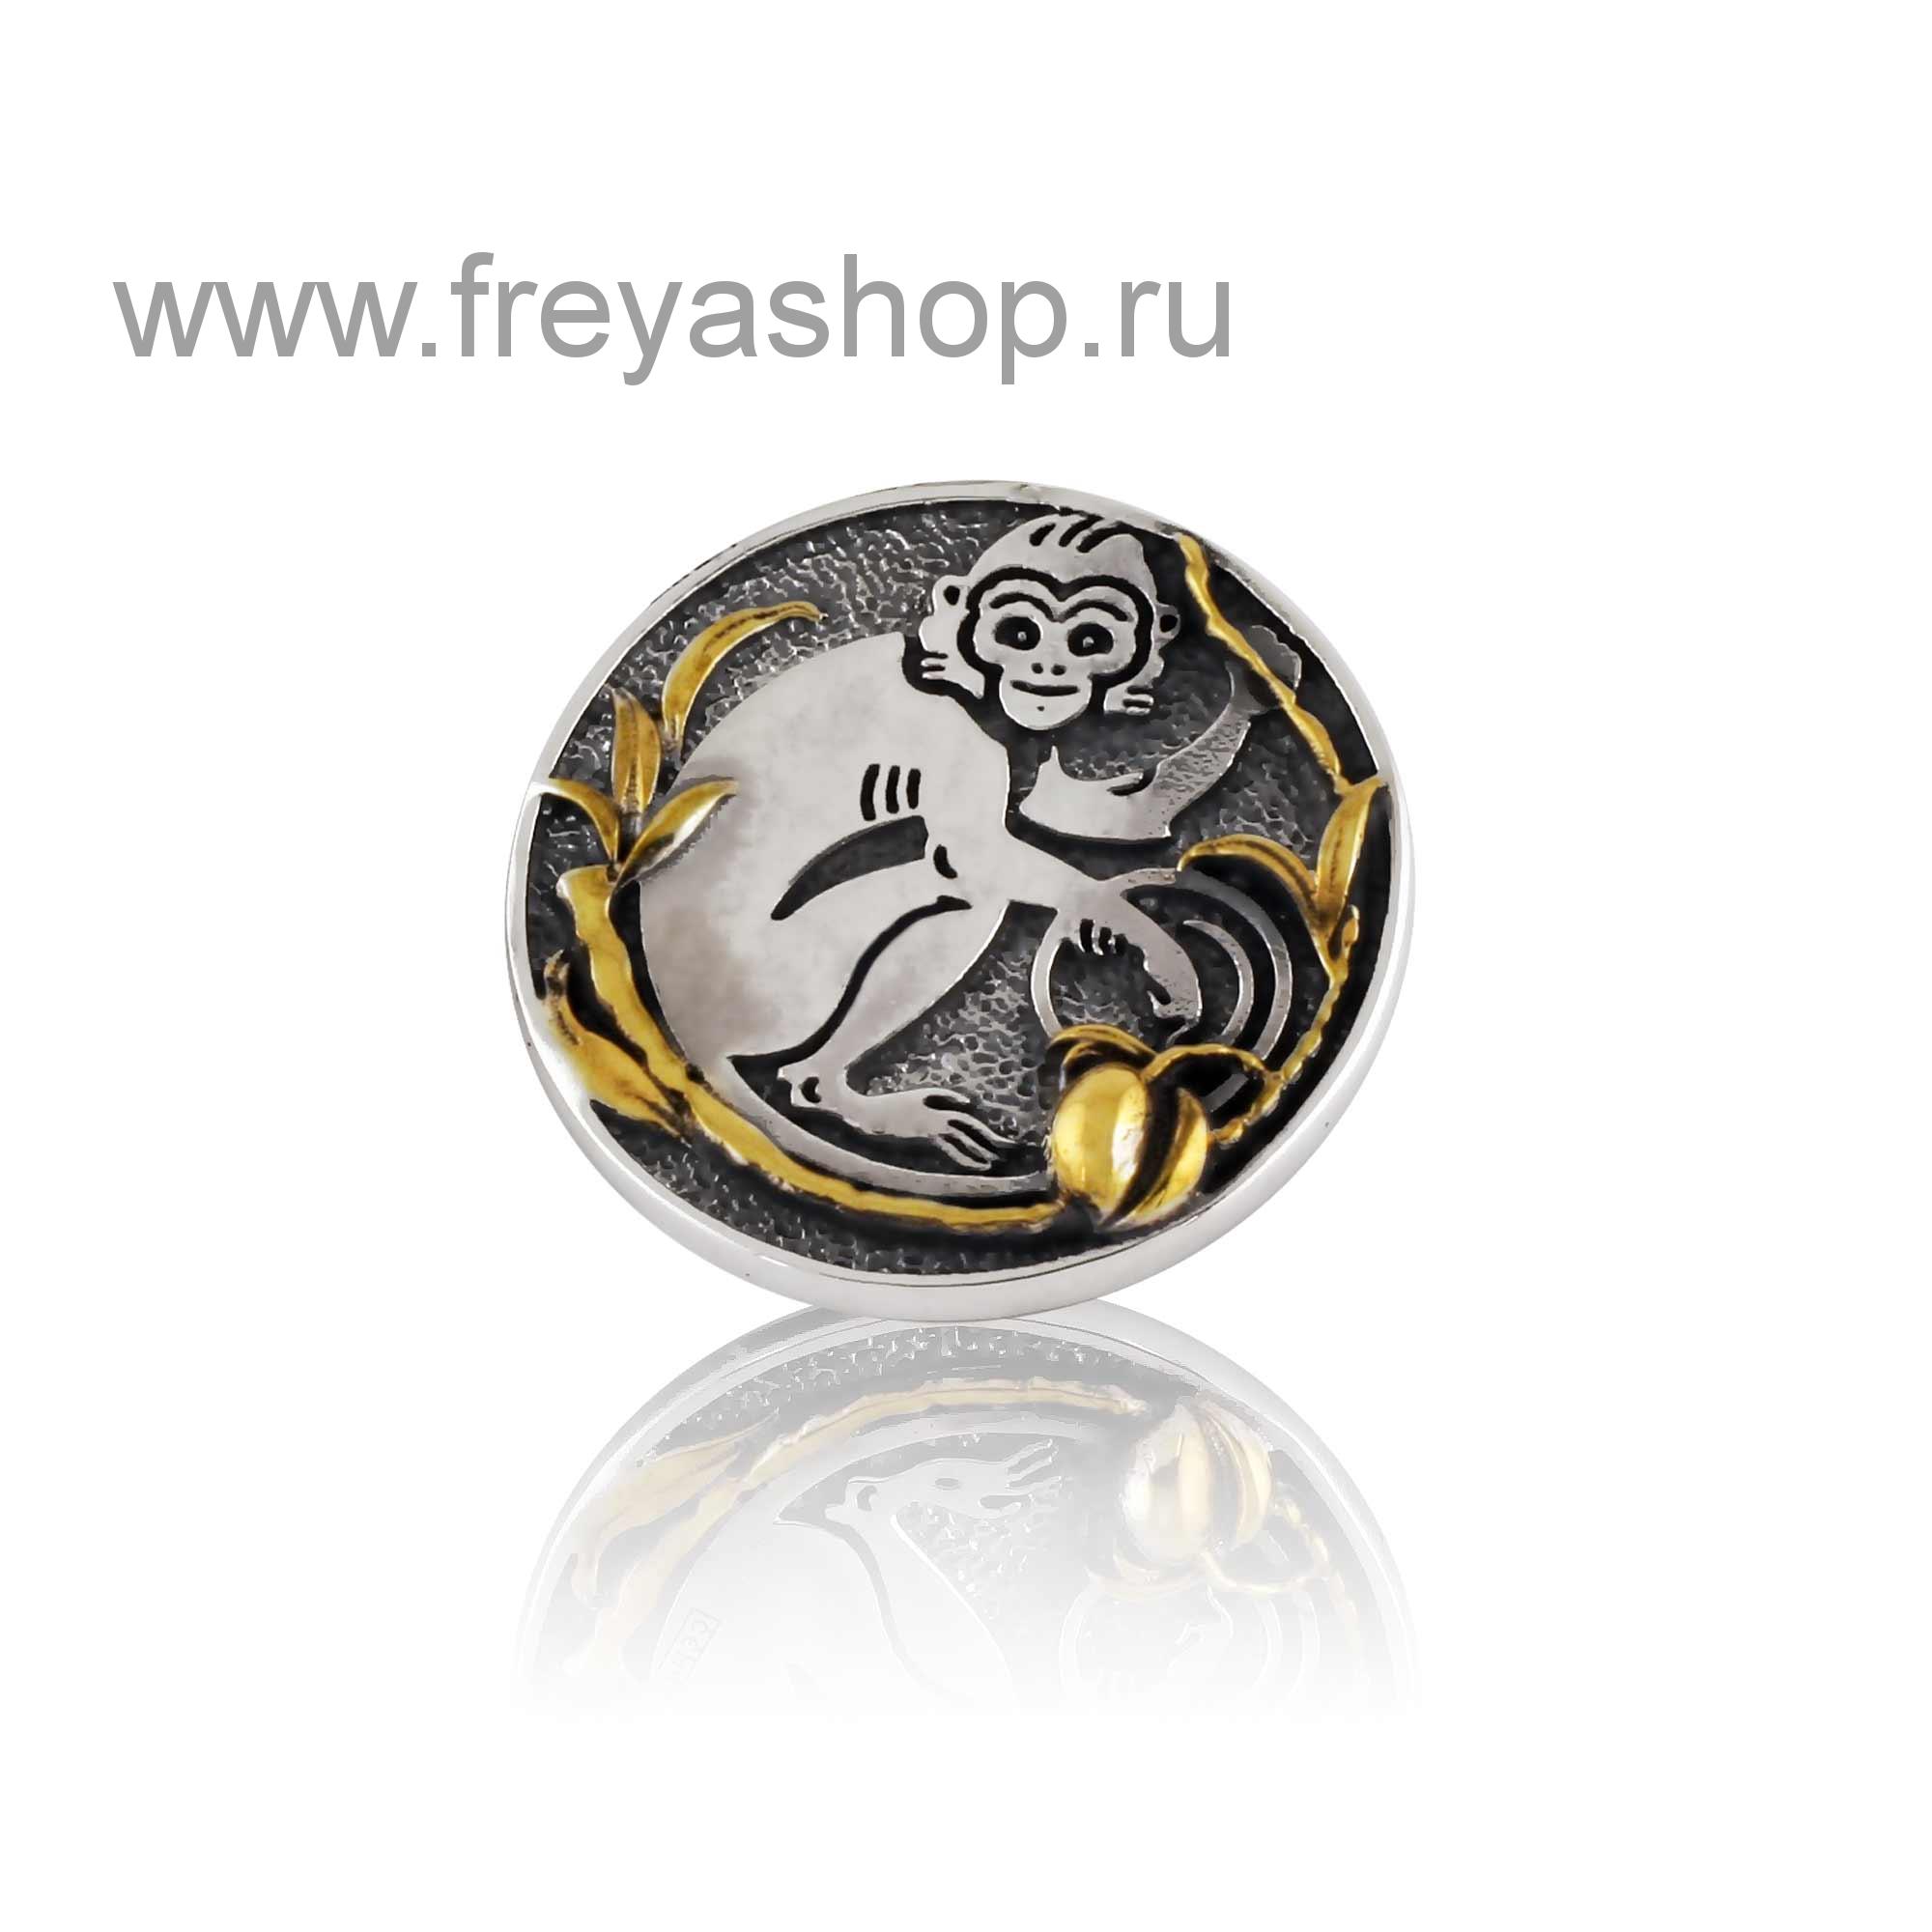 Серебряная монета "На удачу", Россия